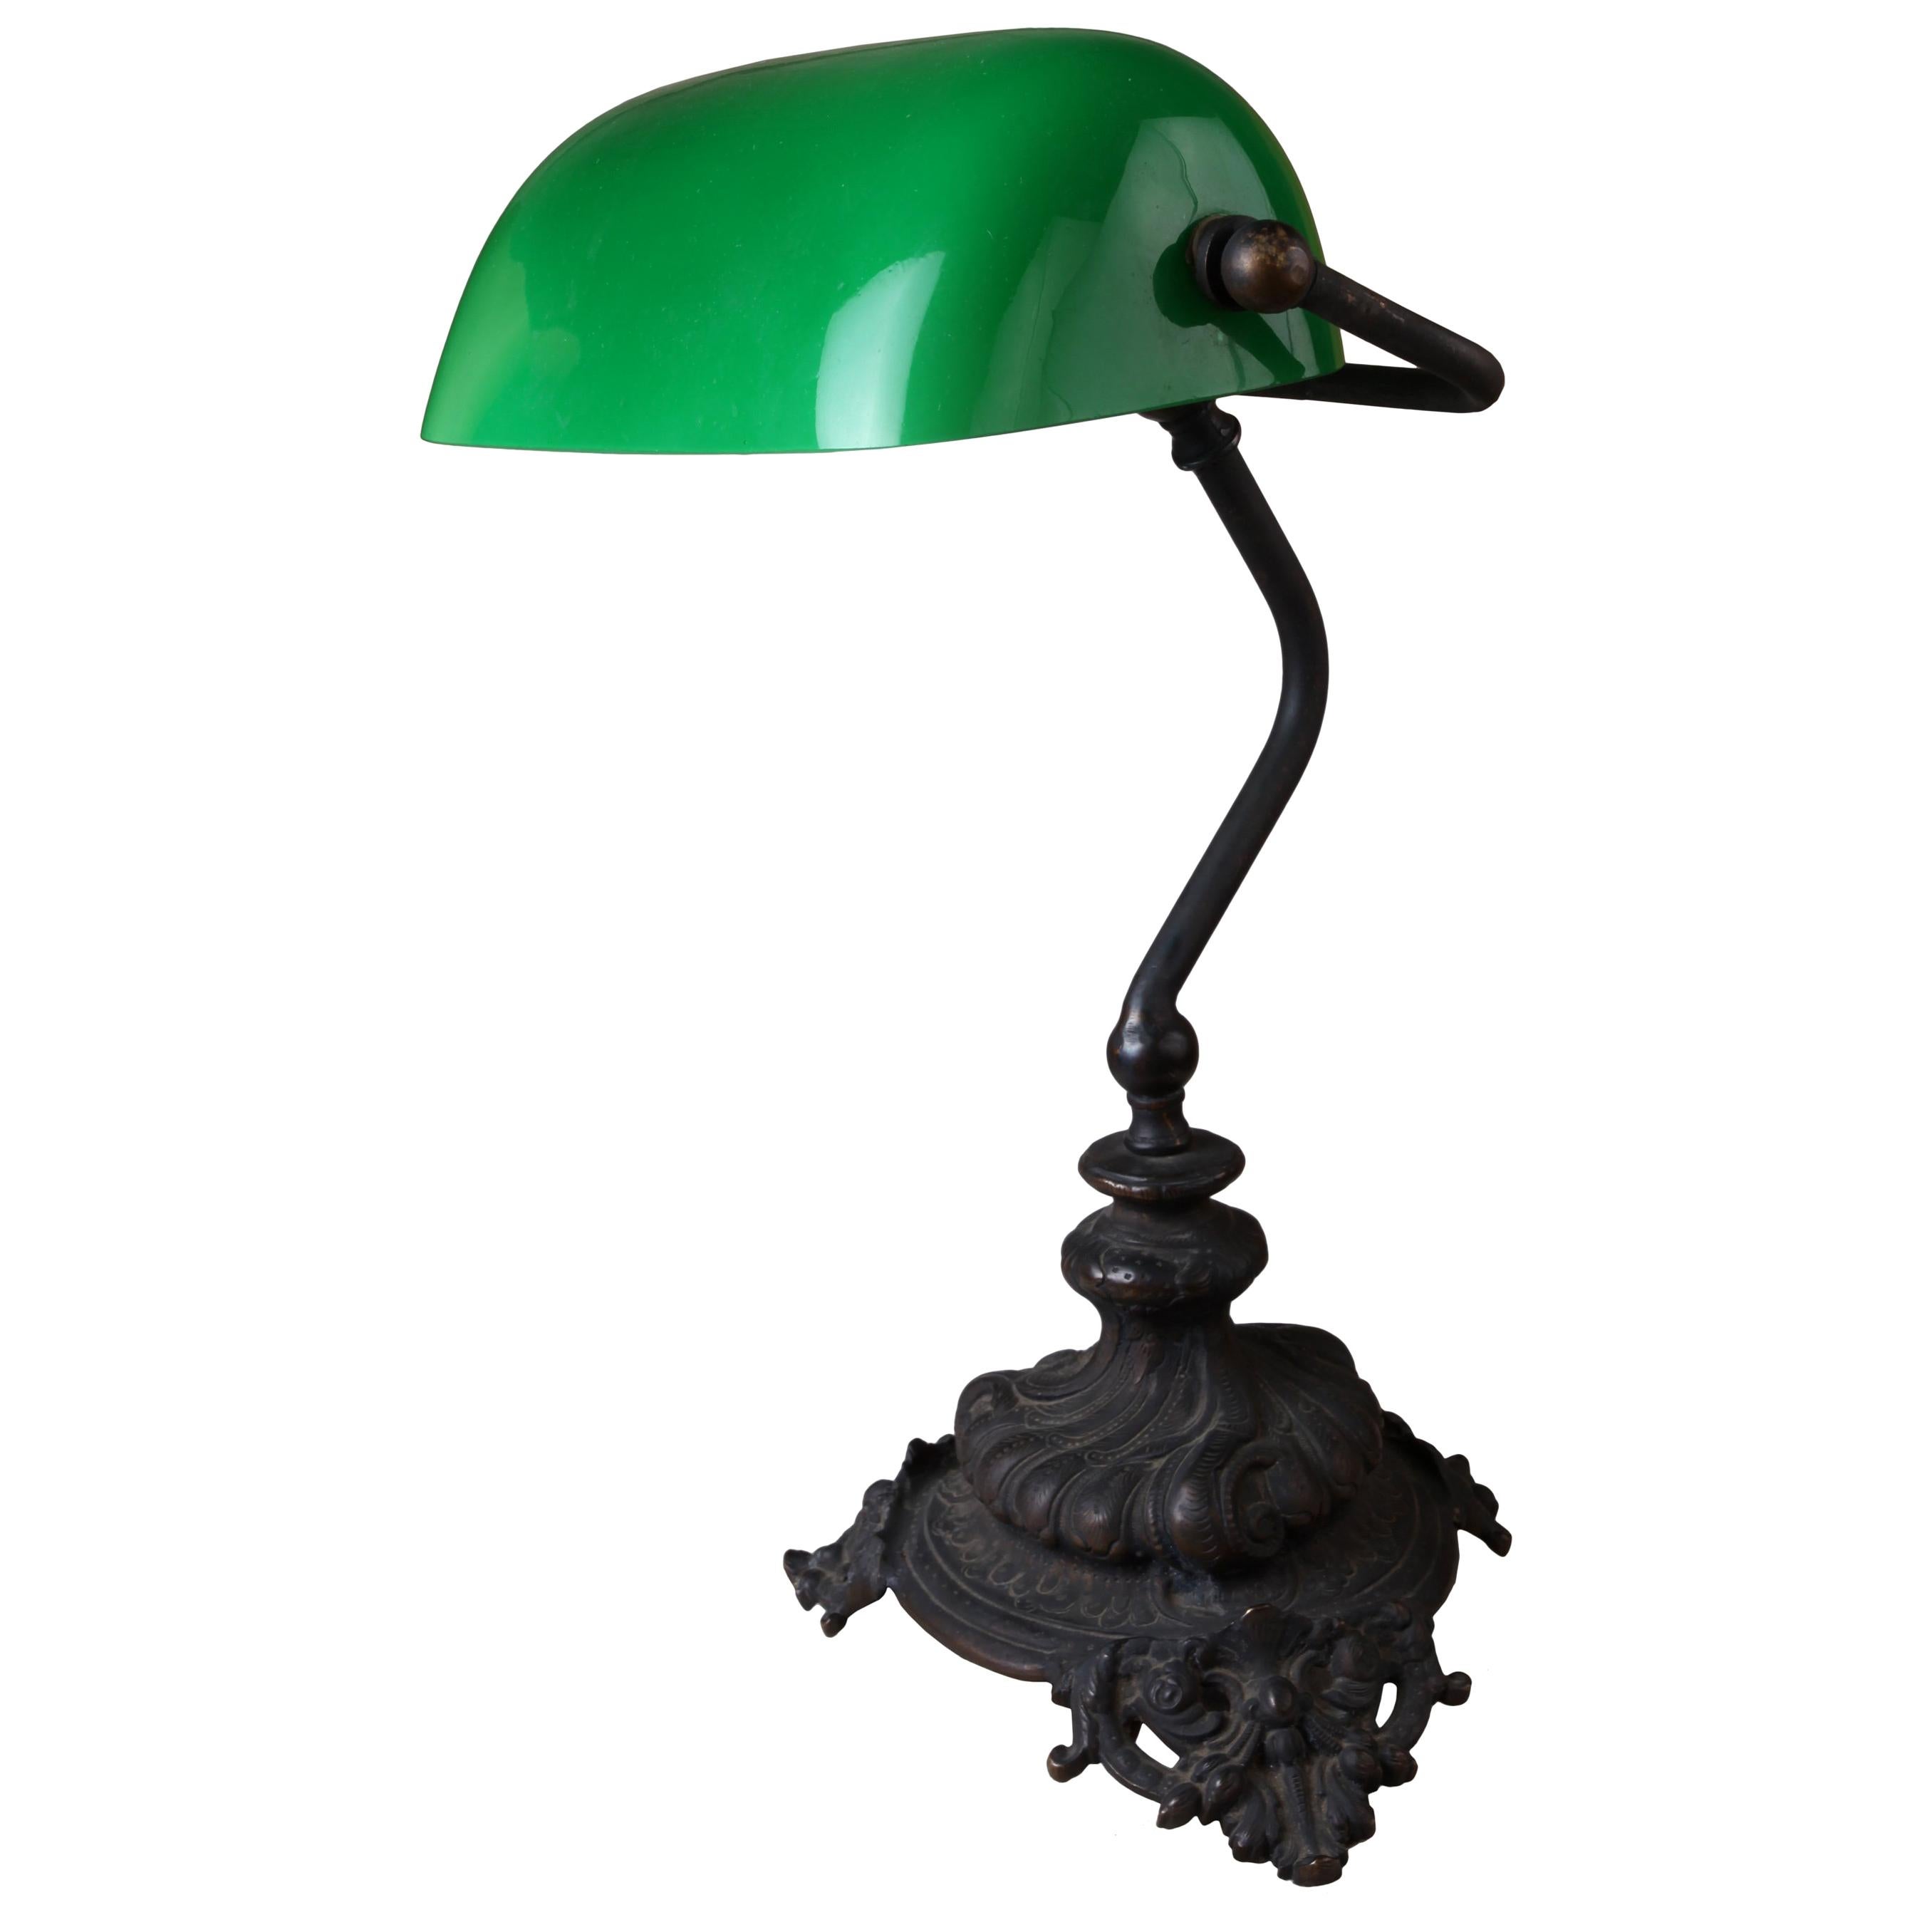 Emeralite Green Case Glass Shade Adjustable Desk Lamp